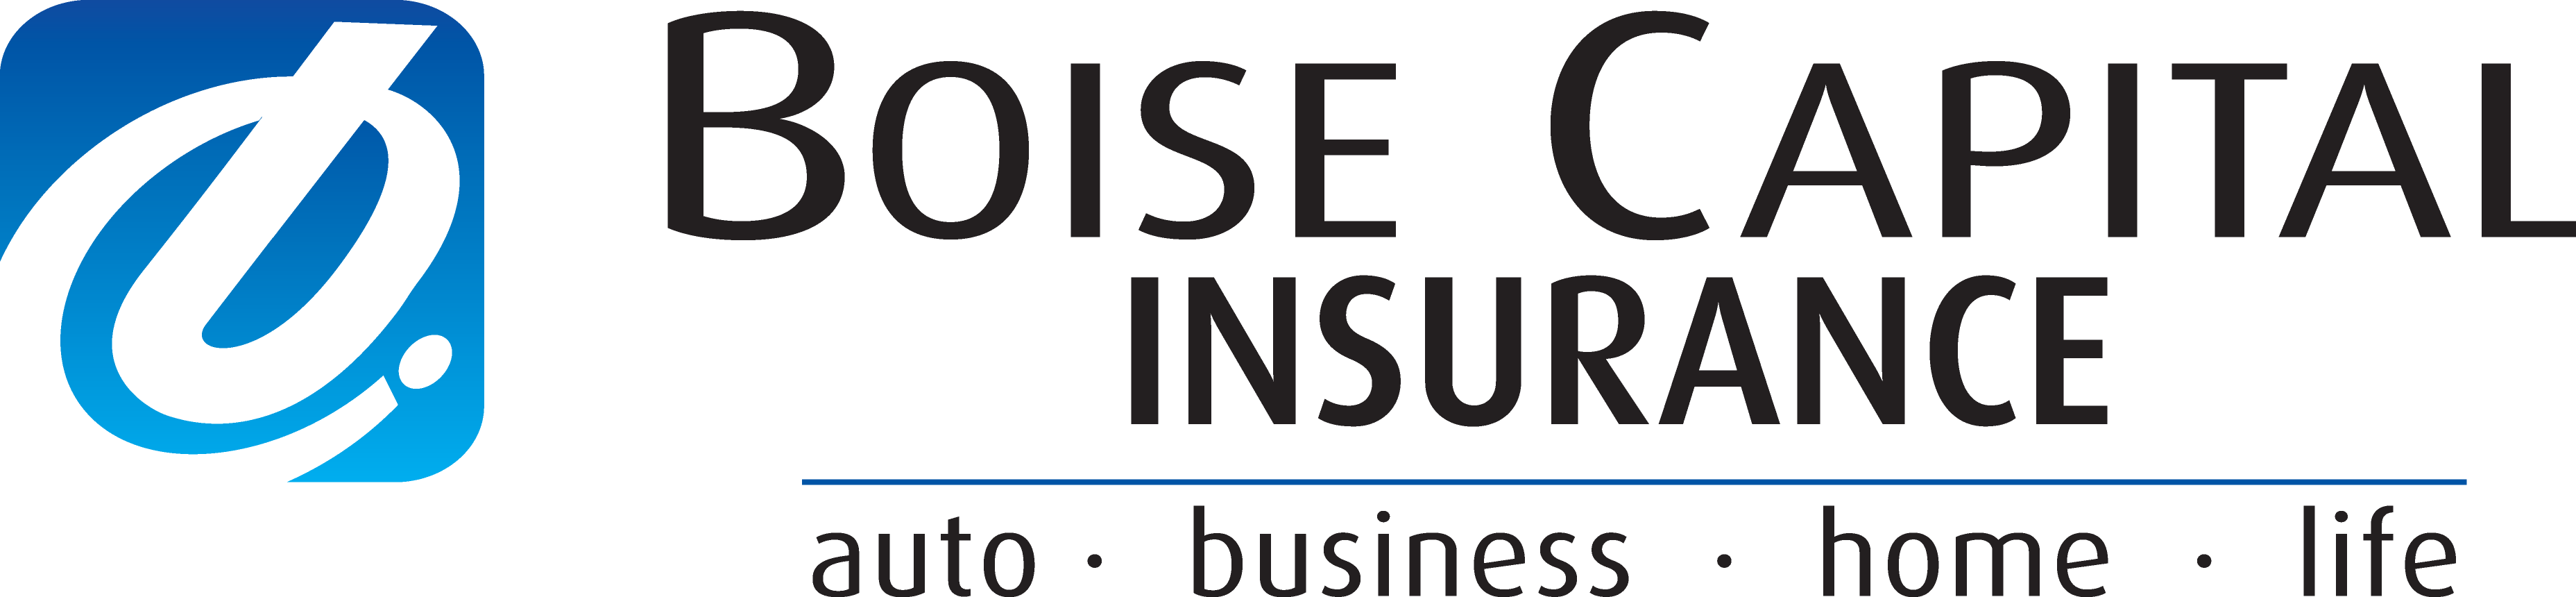 Boise Capital Insurance